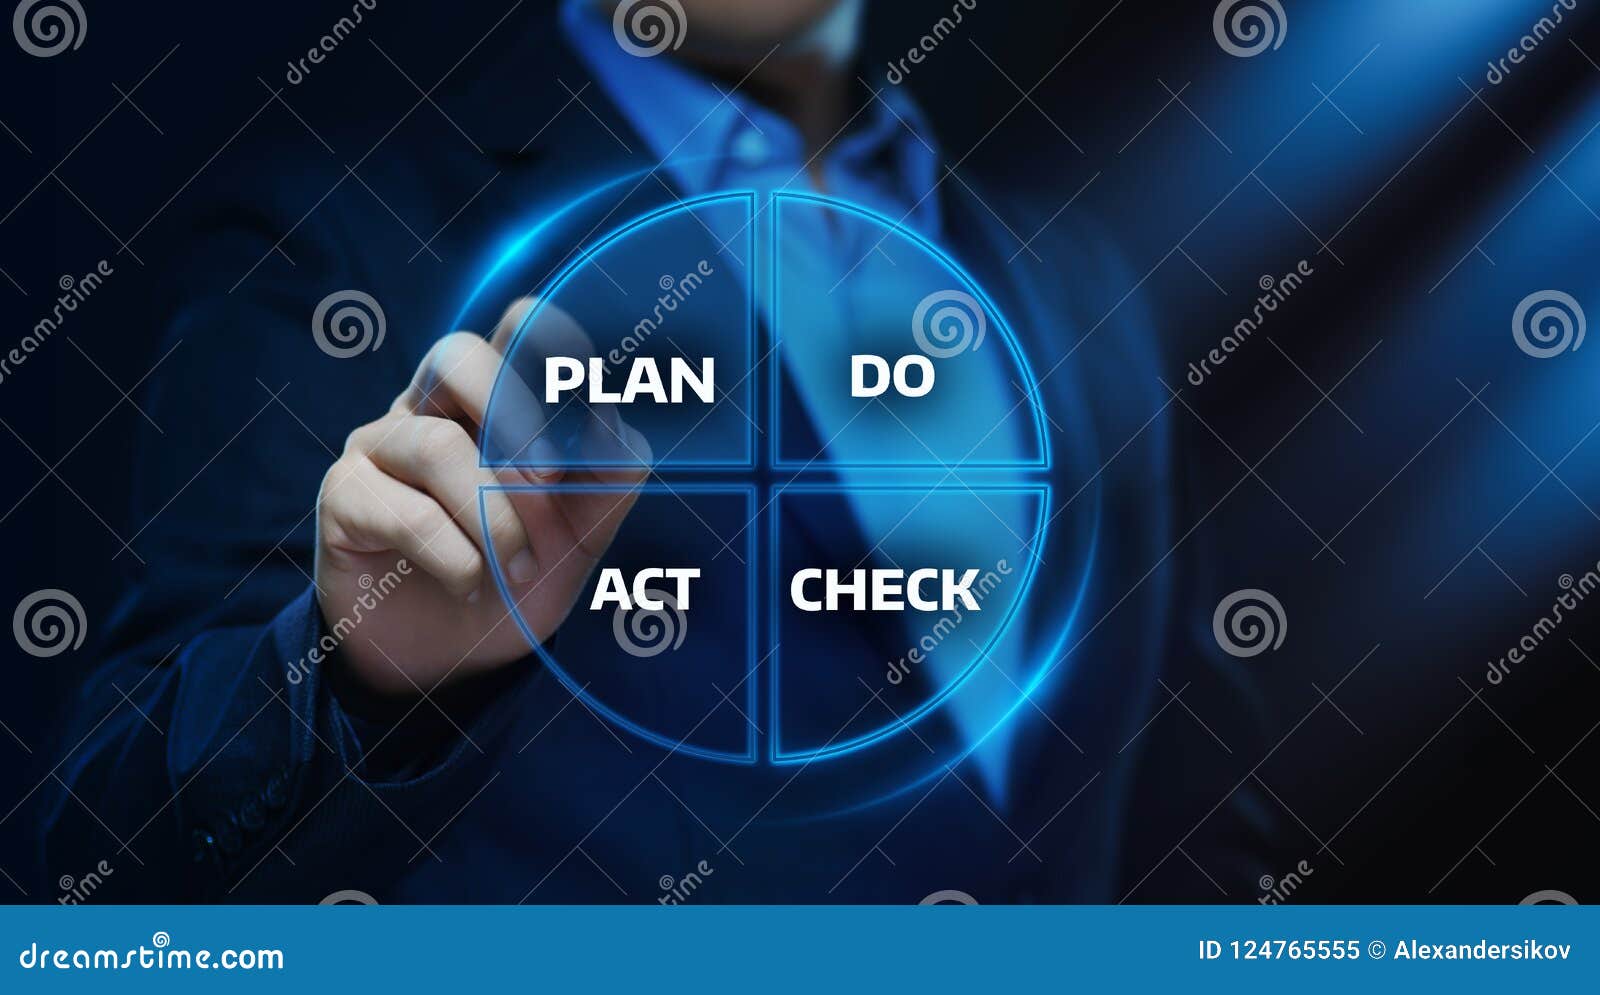 pdca plan do check act business action strategy goal success concept